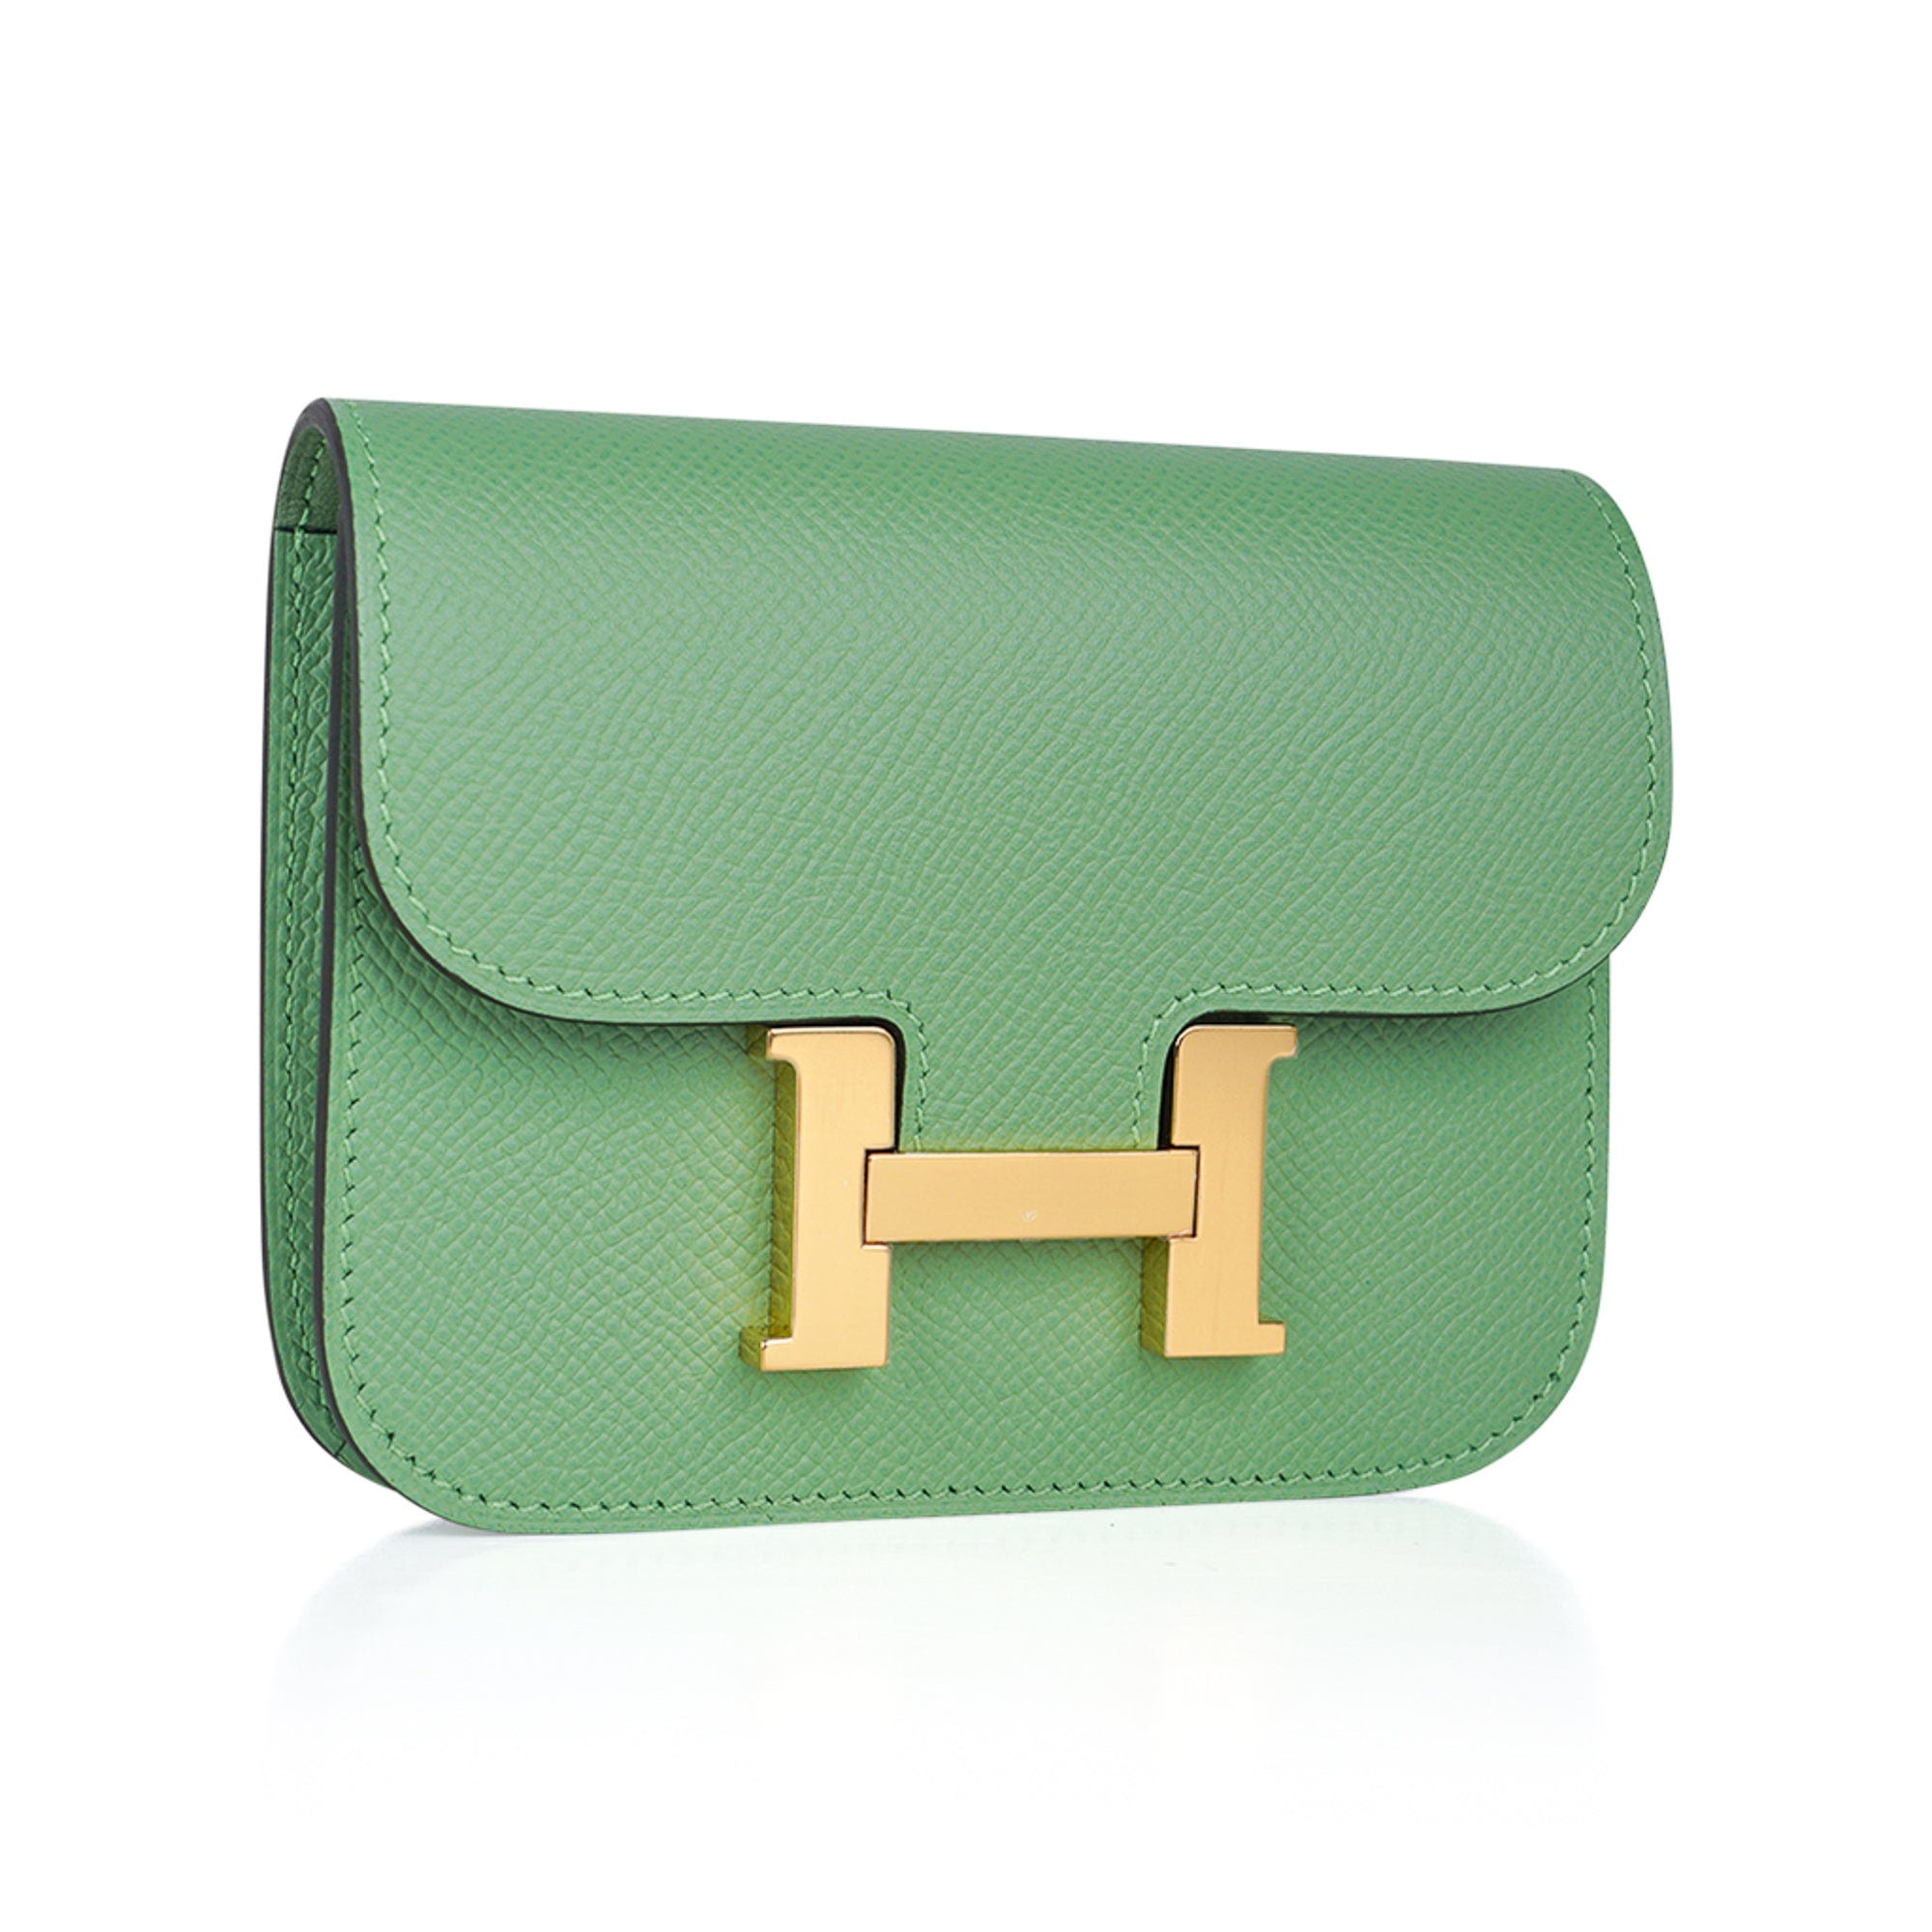 Hermes Constance Slim Wallet in Vert Criquet Epsom Leather with